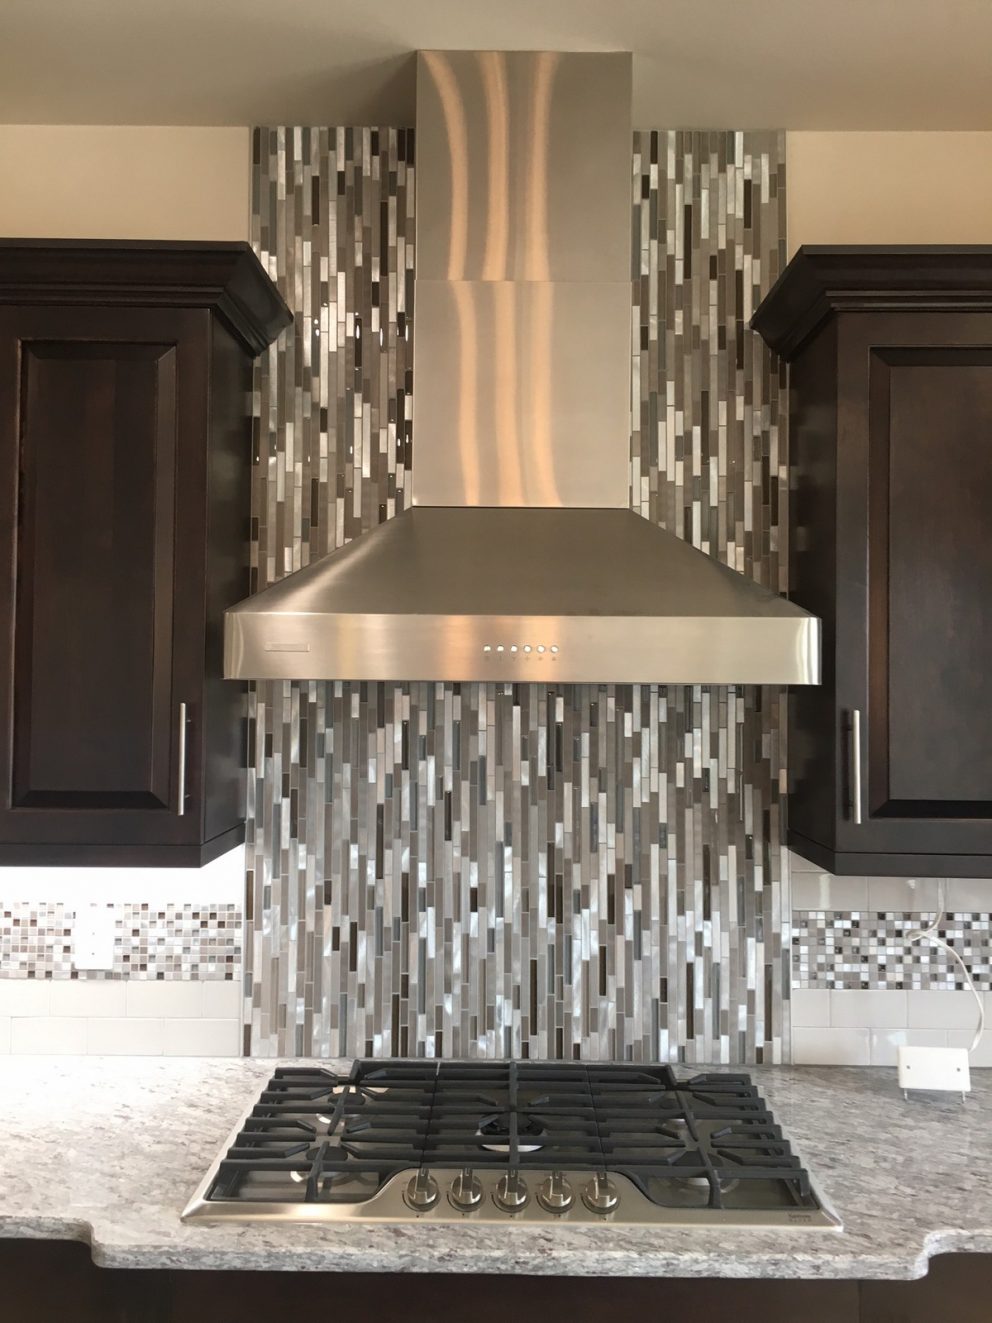 Tile backsplash with stainless steel hood vent